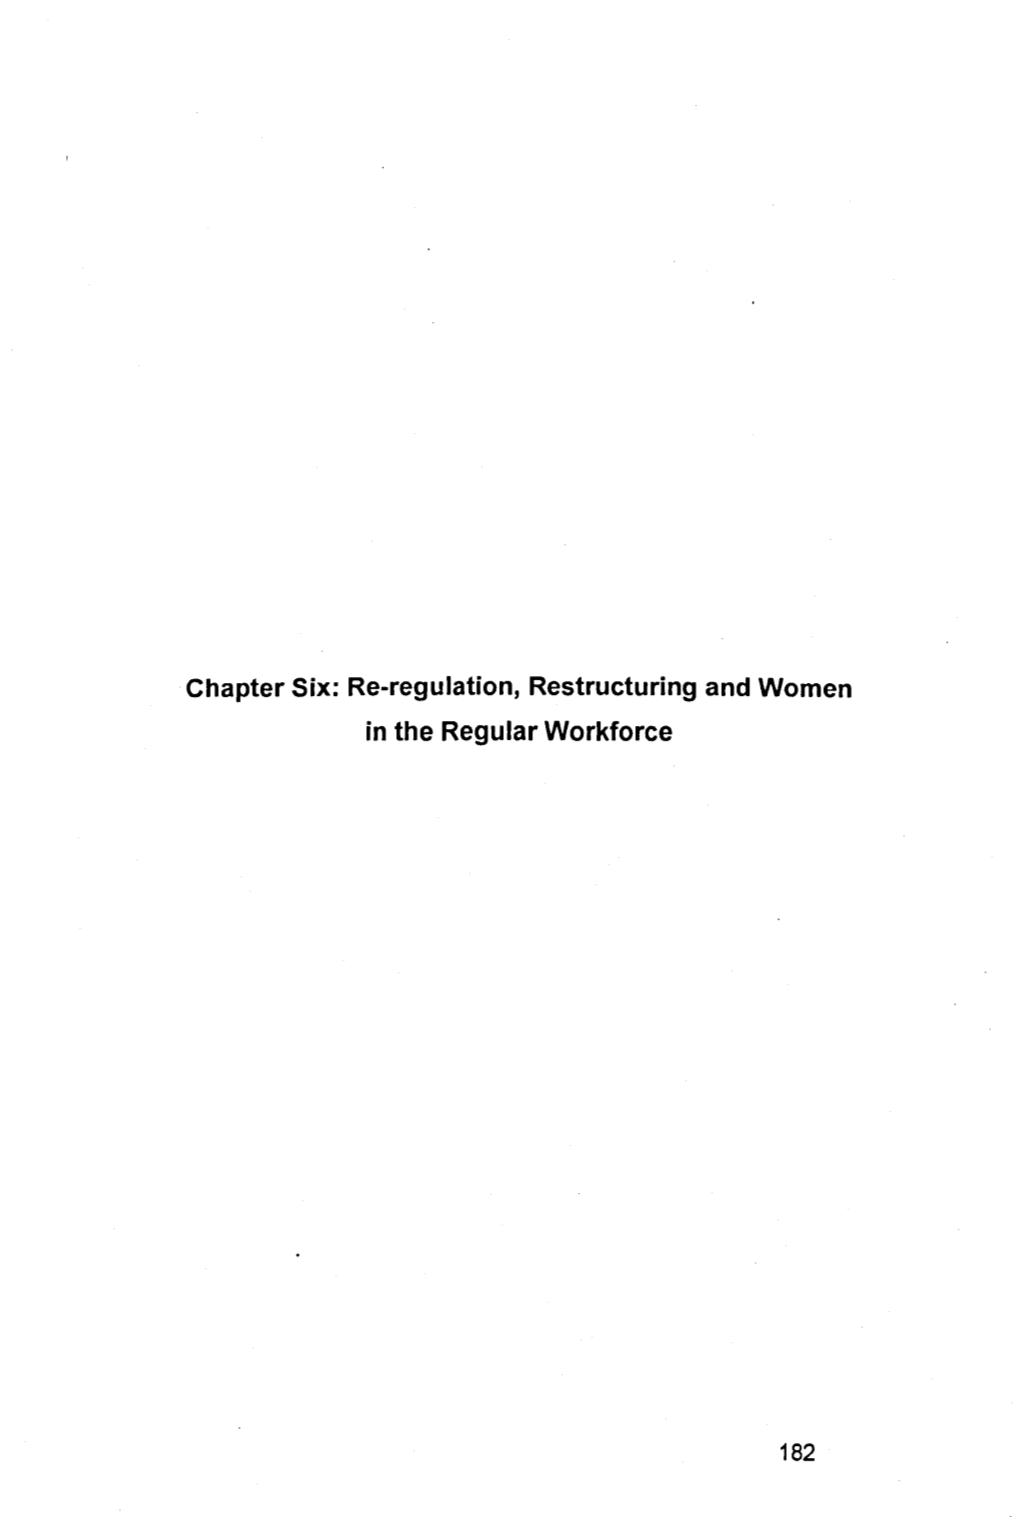 Re-Regulation, Restructuring and Women in the Regular Workforce